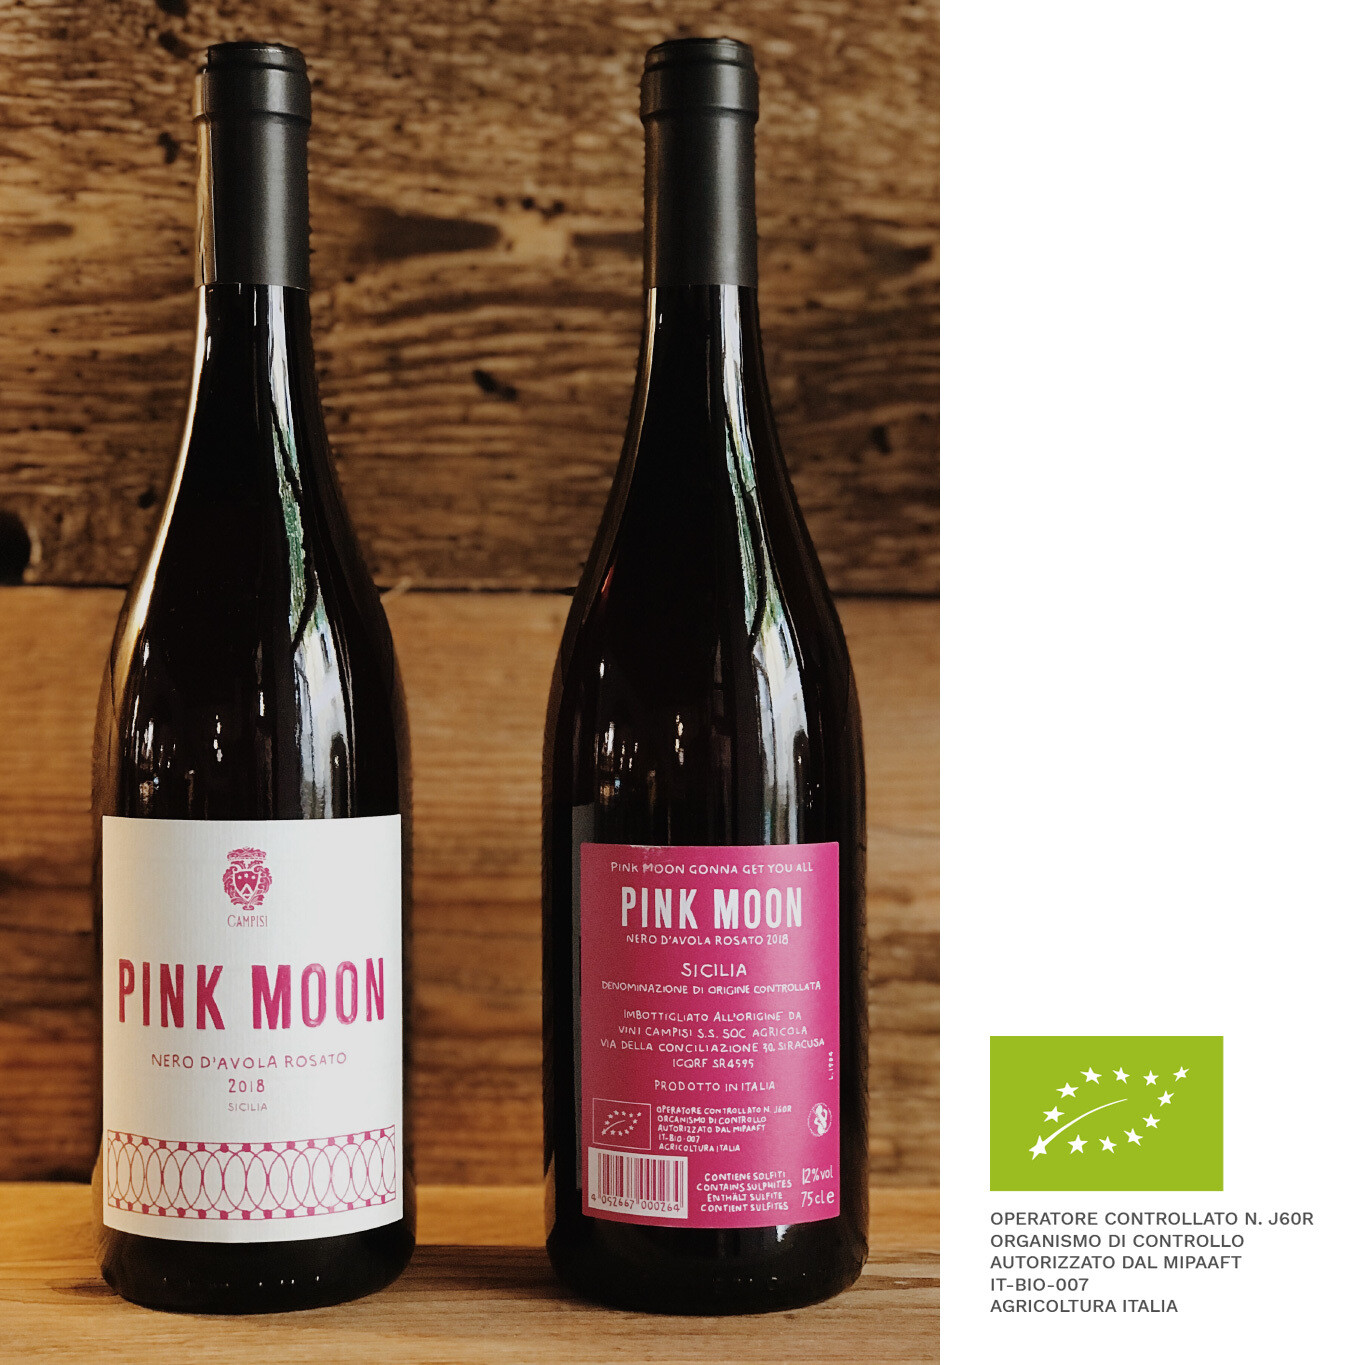 PINK MOON 2019 - Nero d'avola rosato